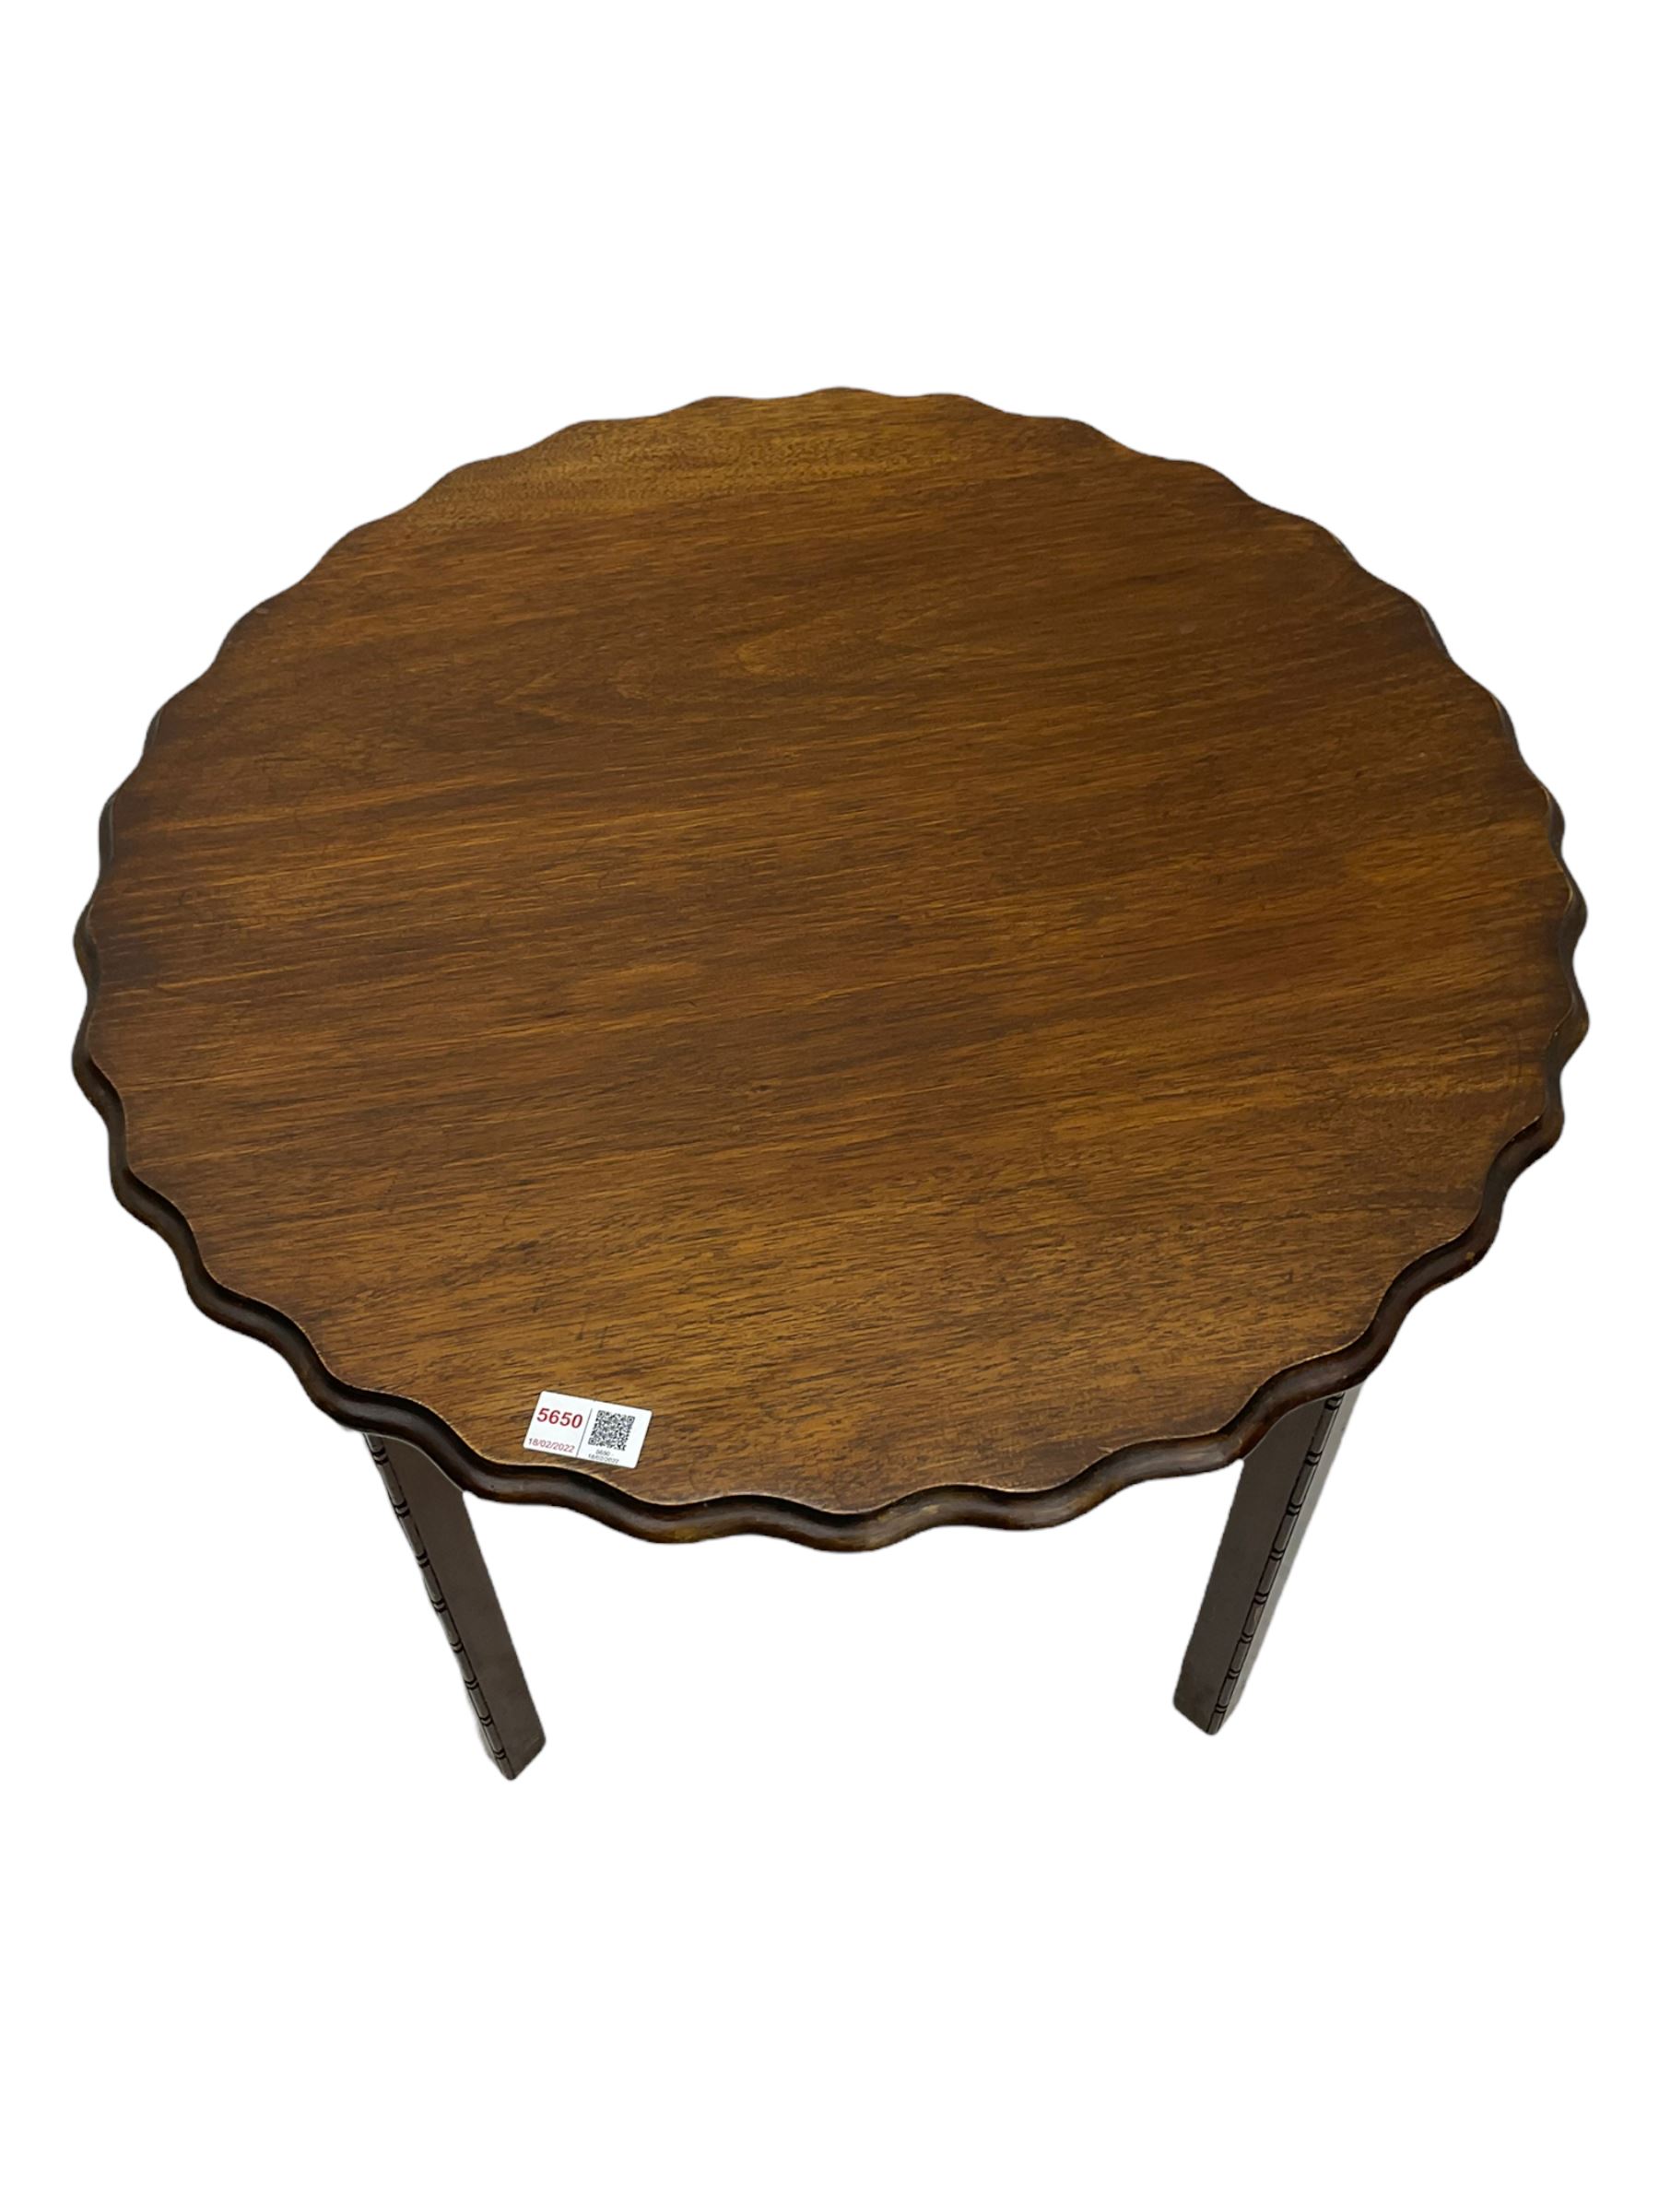 George III mahogany side table - Image 8 of 13